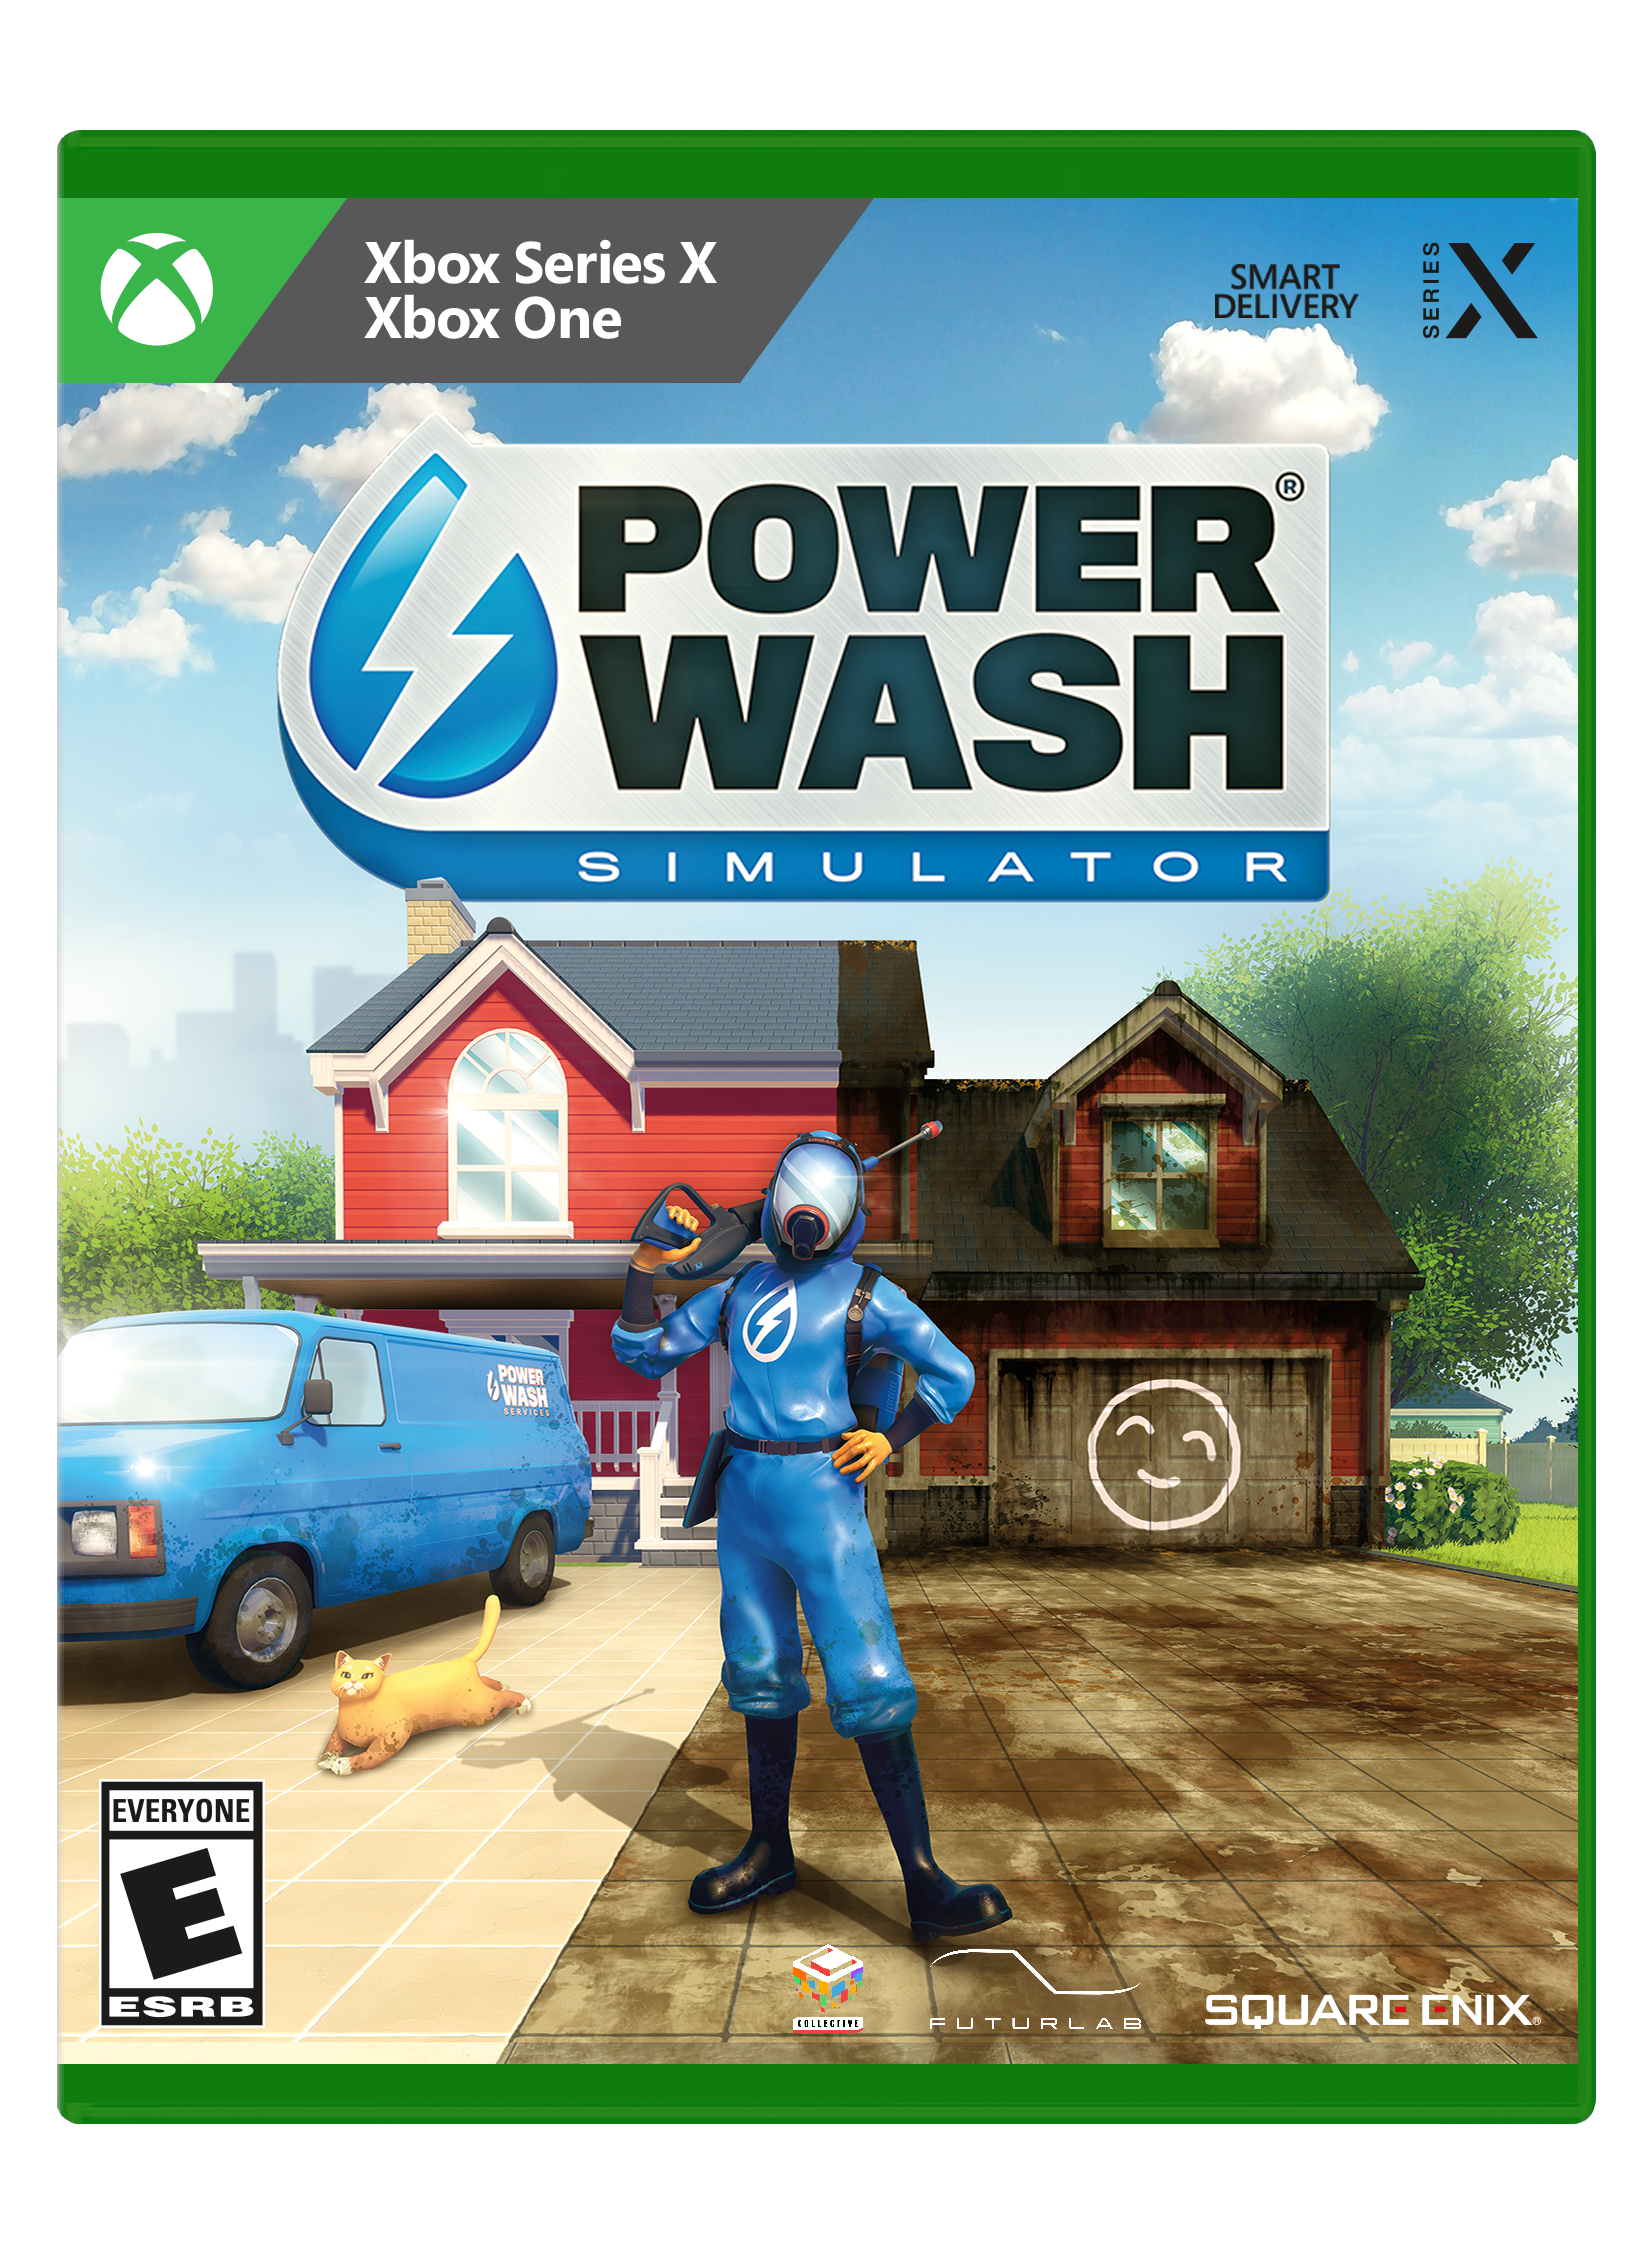 PowerWash Simulator: Back to the Future Videos for Xbox One - GameFAQs